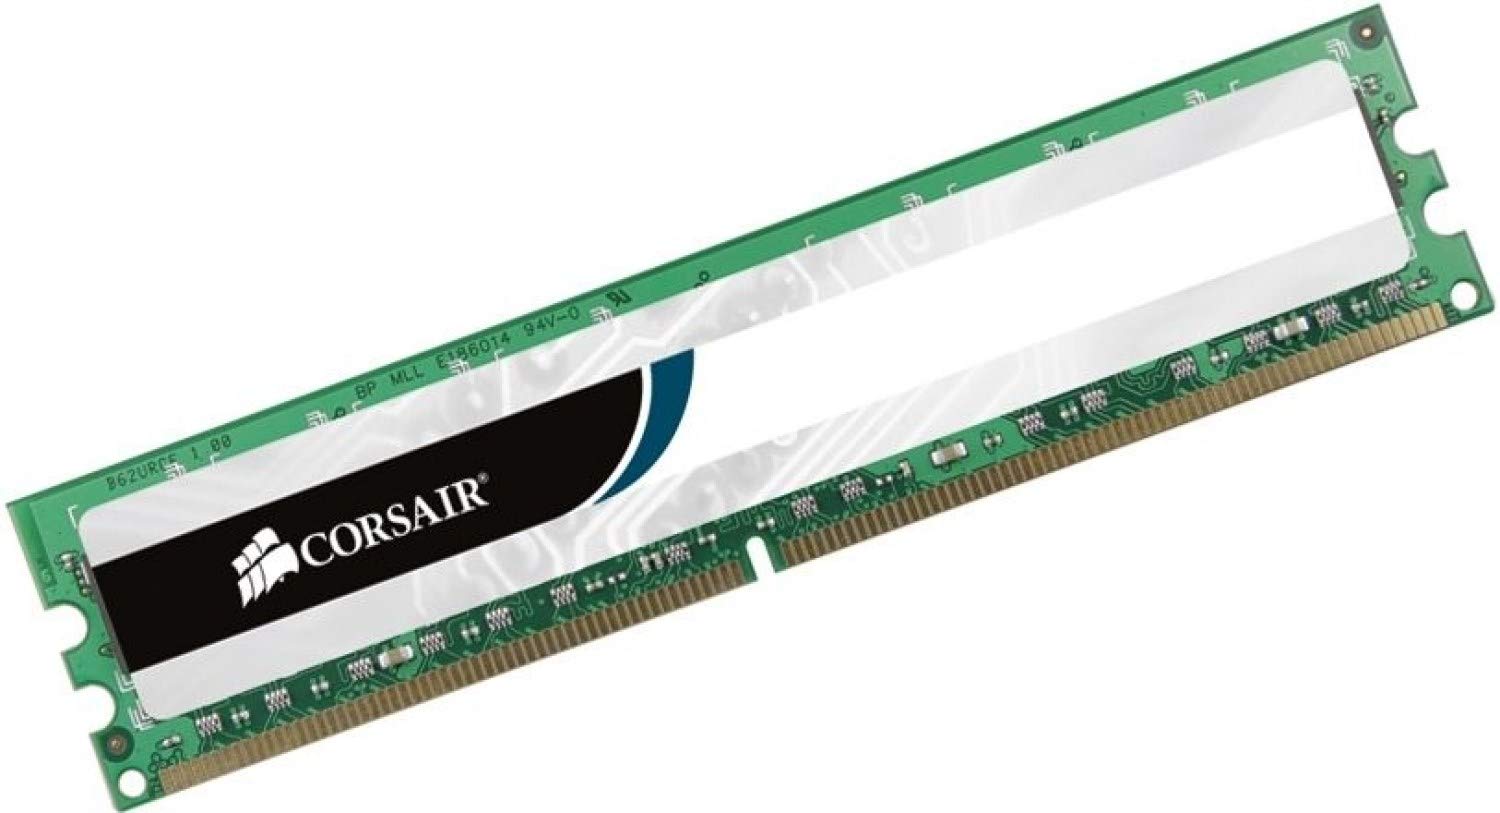 Corsair CMV8GX3M1A1600C11 Value Select 8GB (1x8GB) DDR3 1600 Mhz CL11 Standard Desktop Memory, 1600Mhz